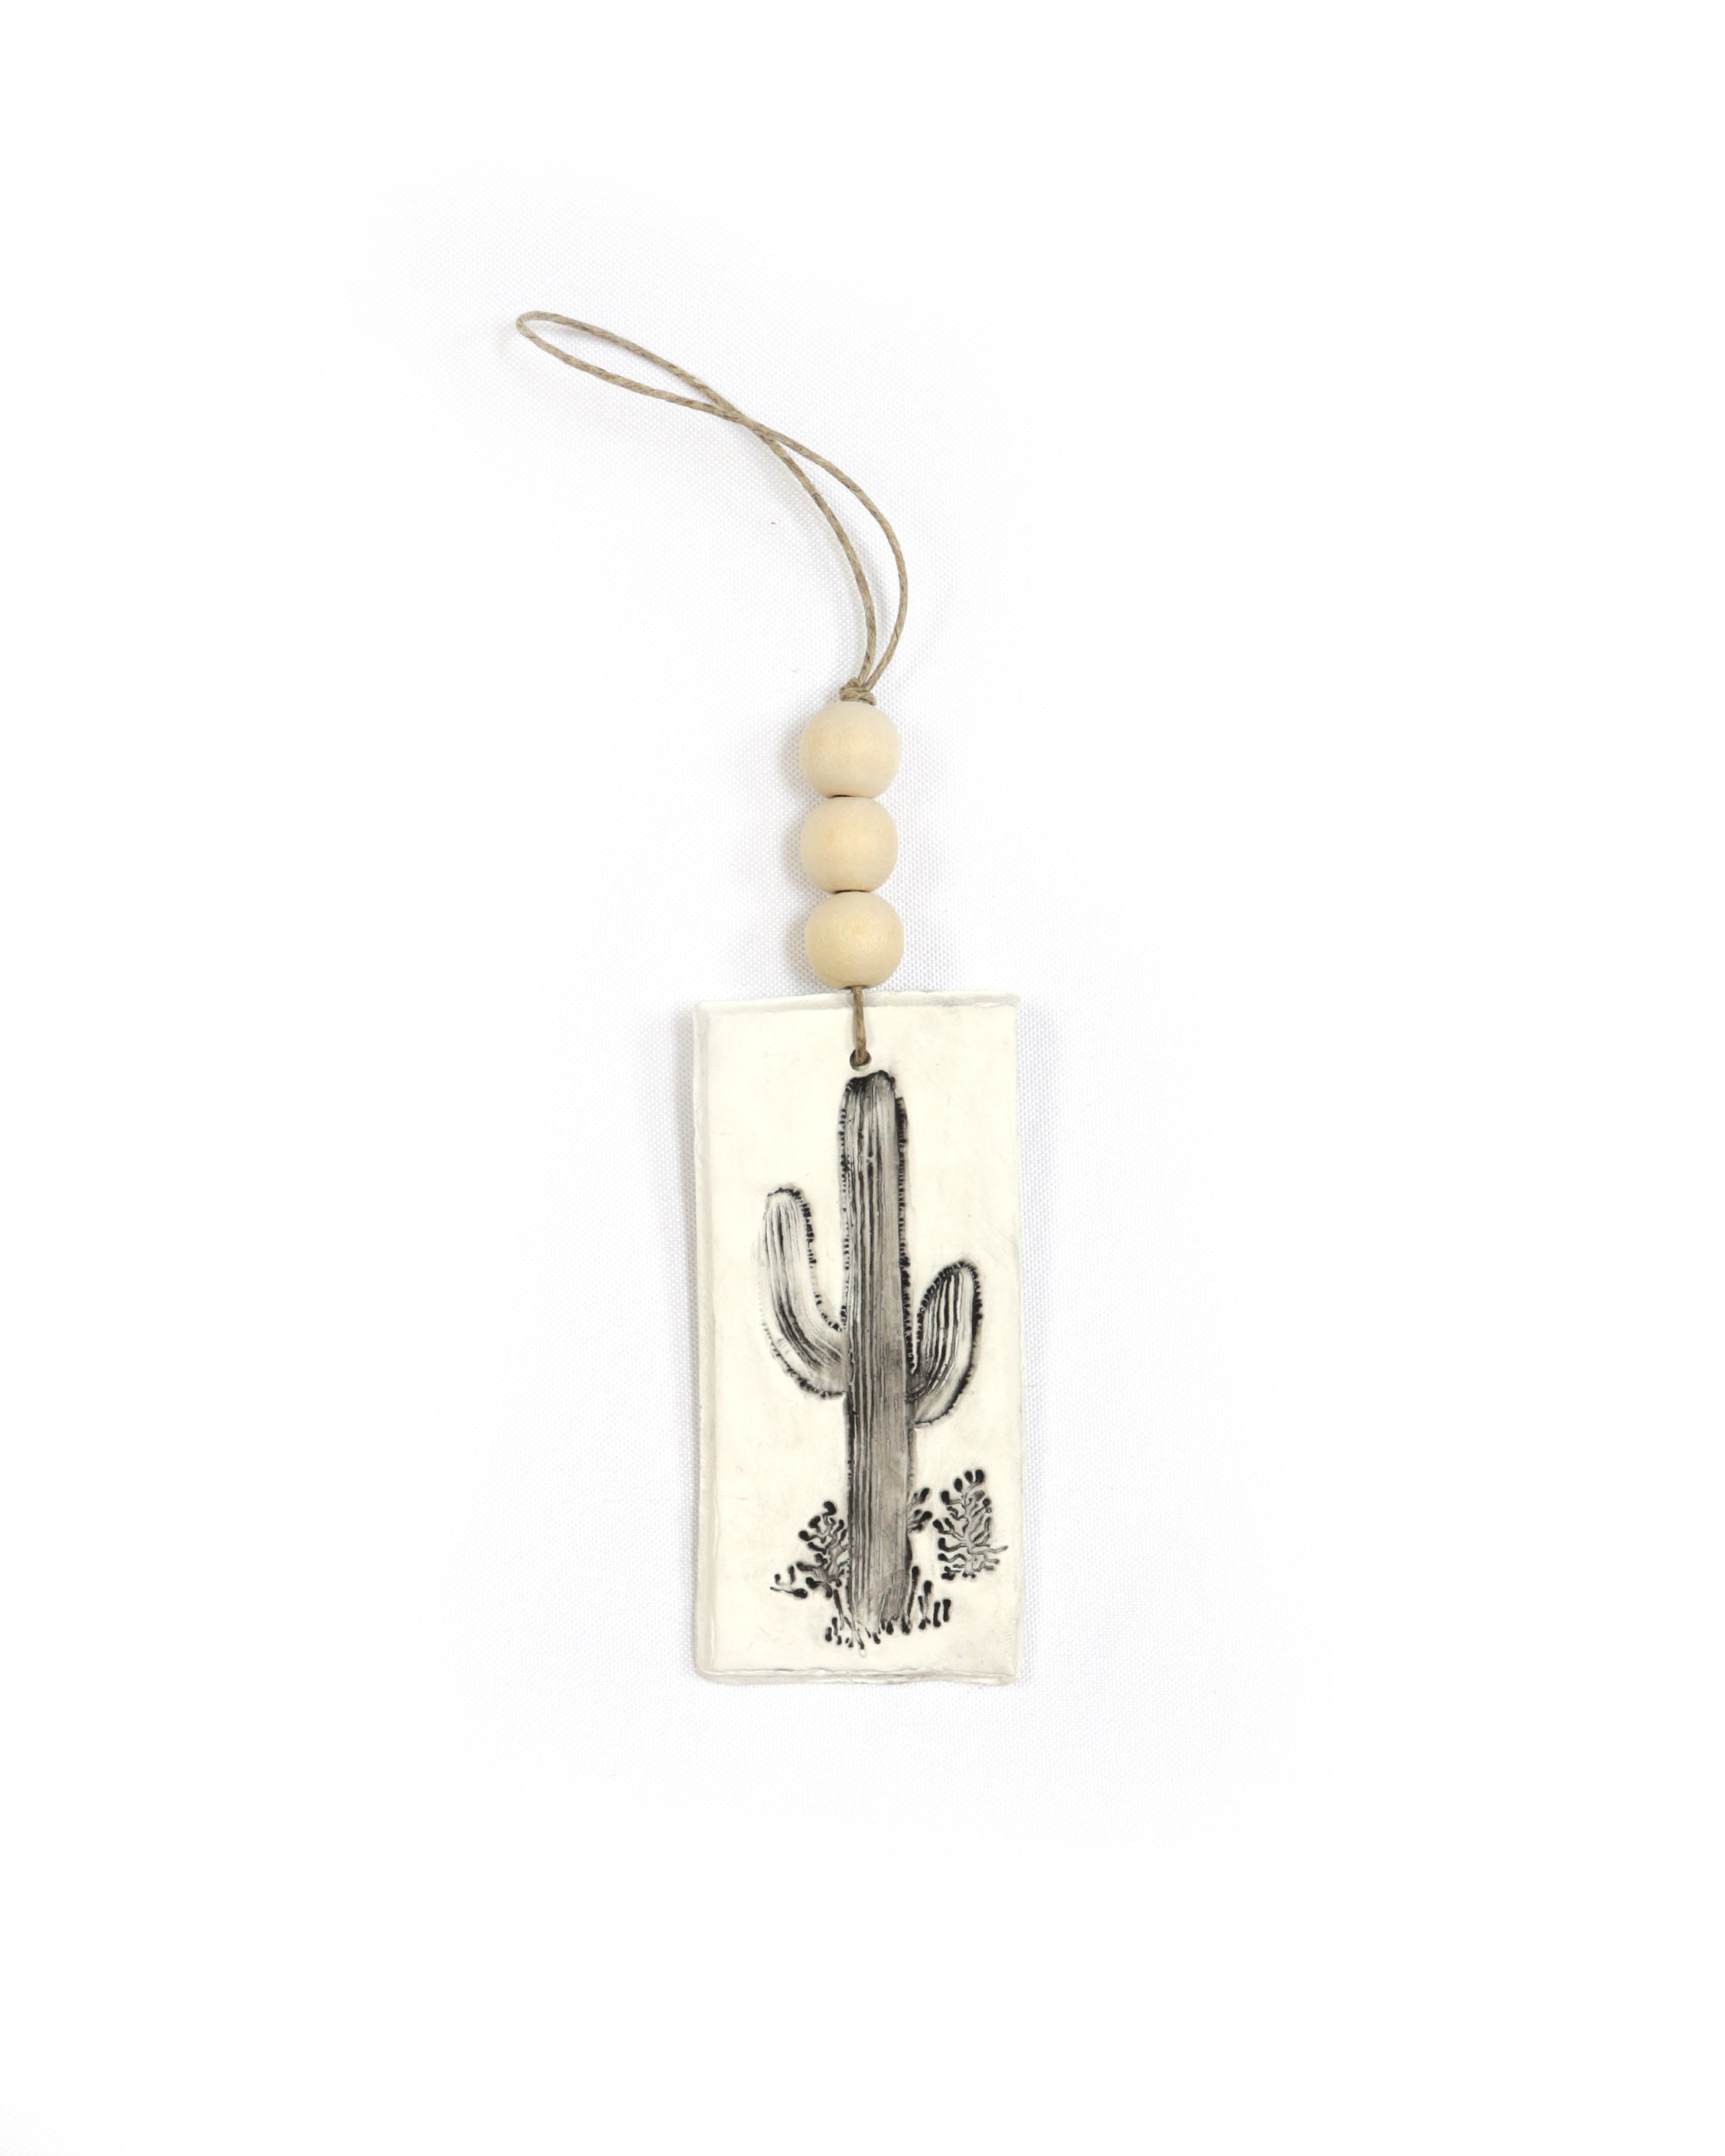 Thunderbird/White Cactus block print ornament set